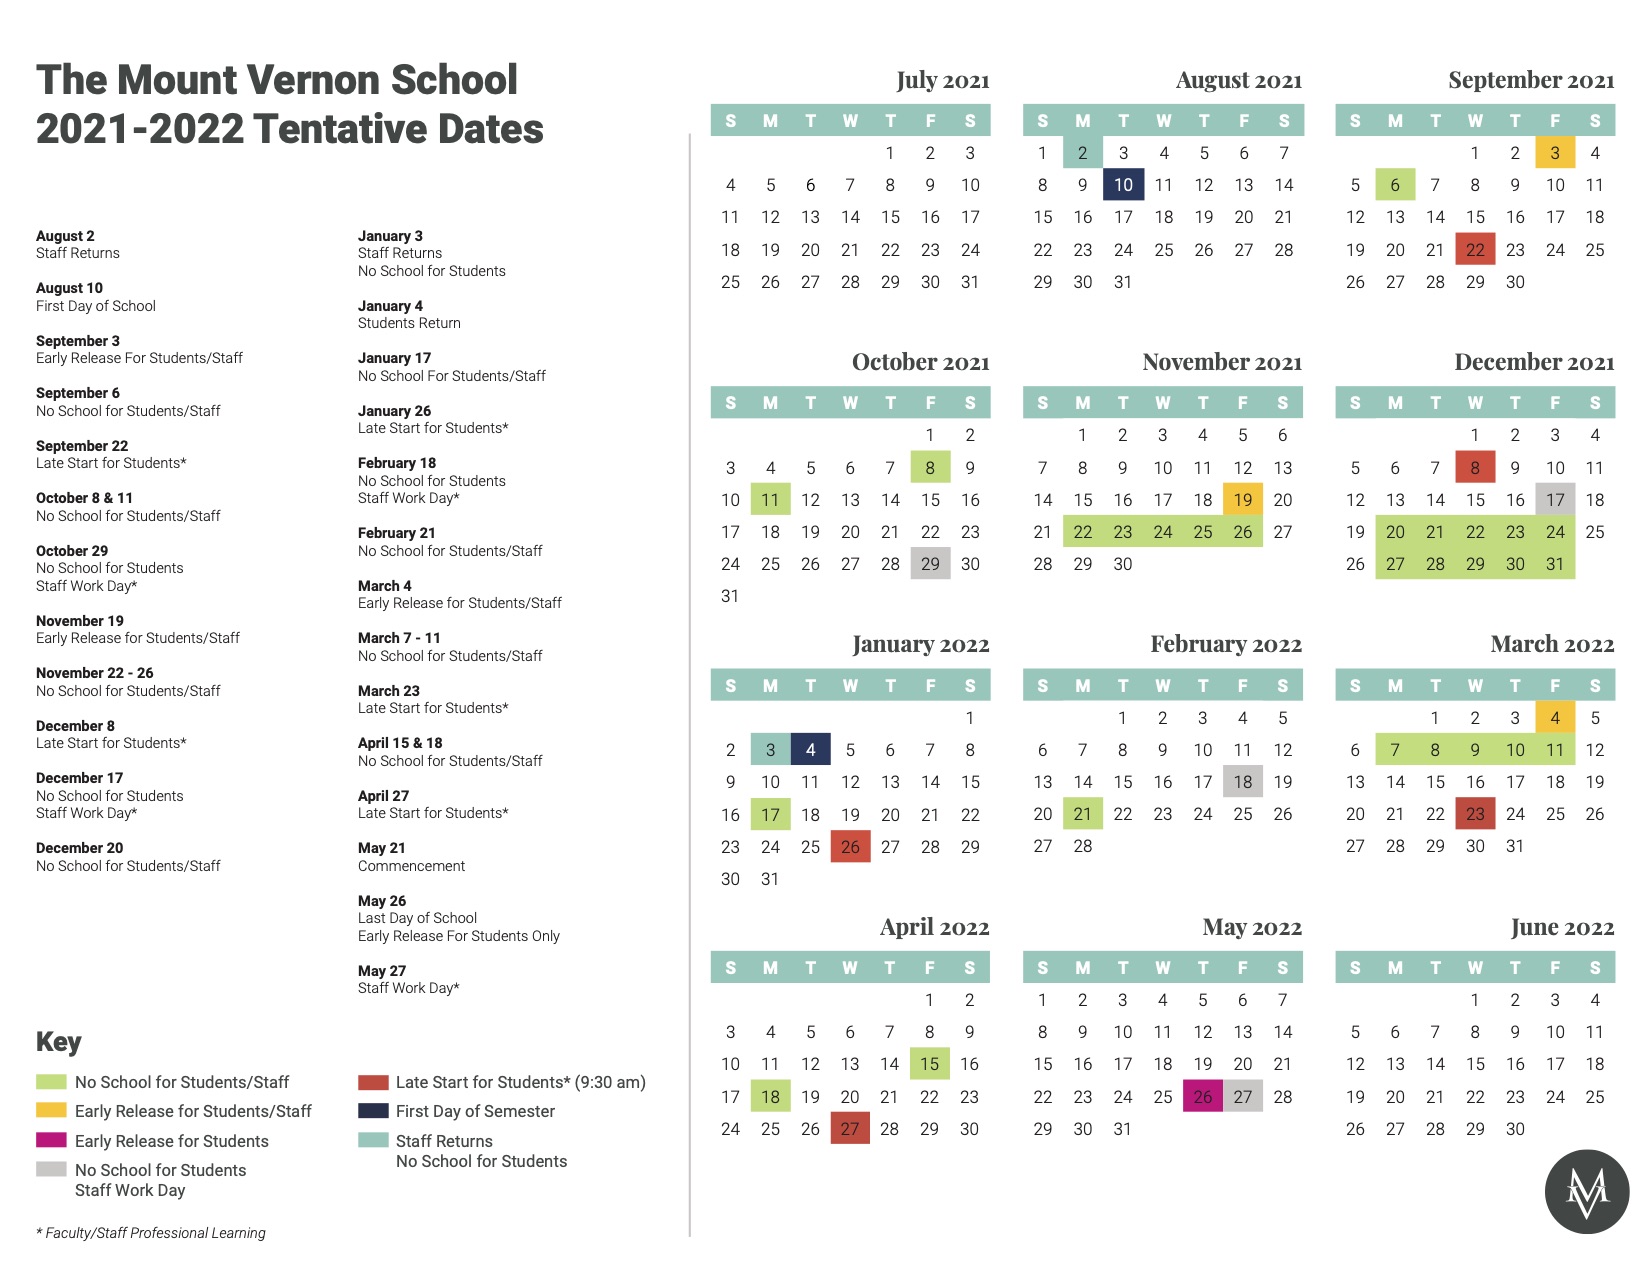 Emory Calendar 2022 Key Calendar Dates 2021-2022 | Mount Vernon School